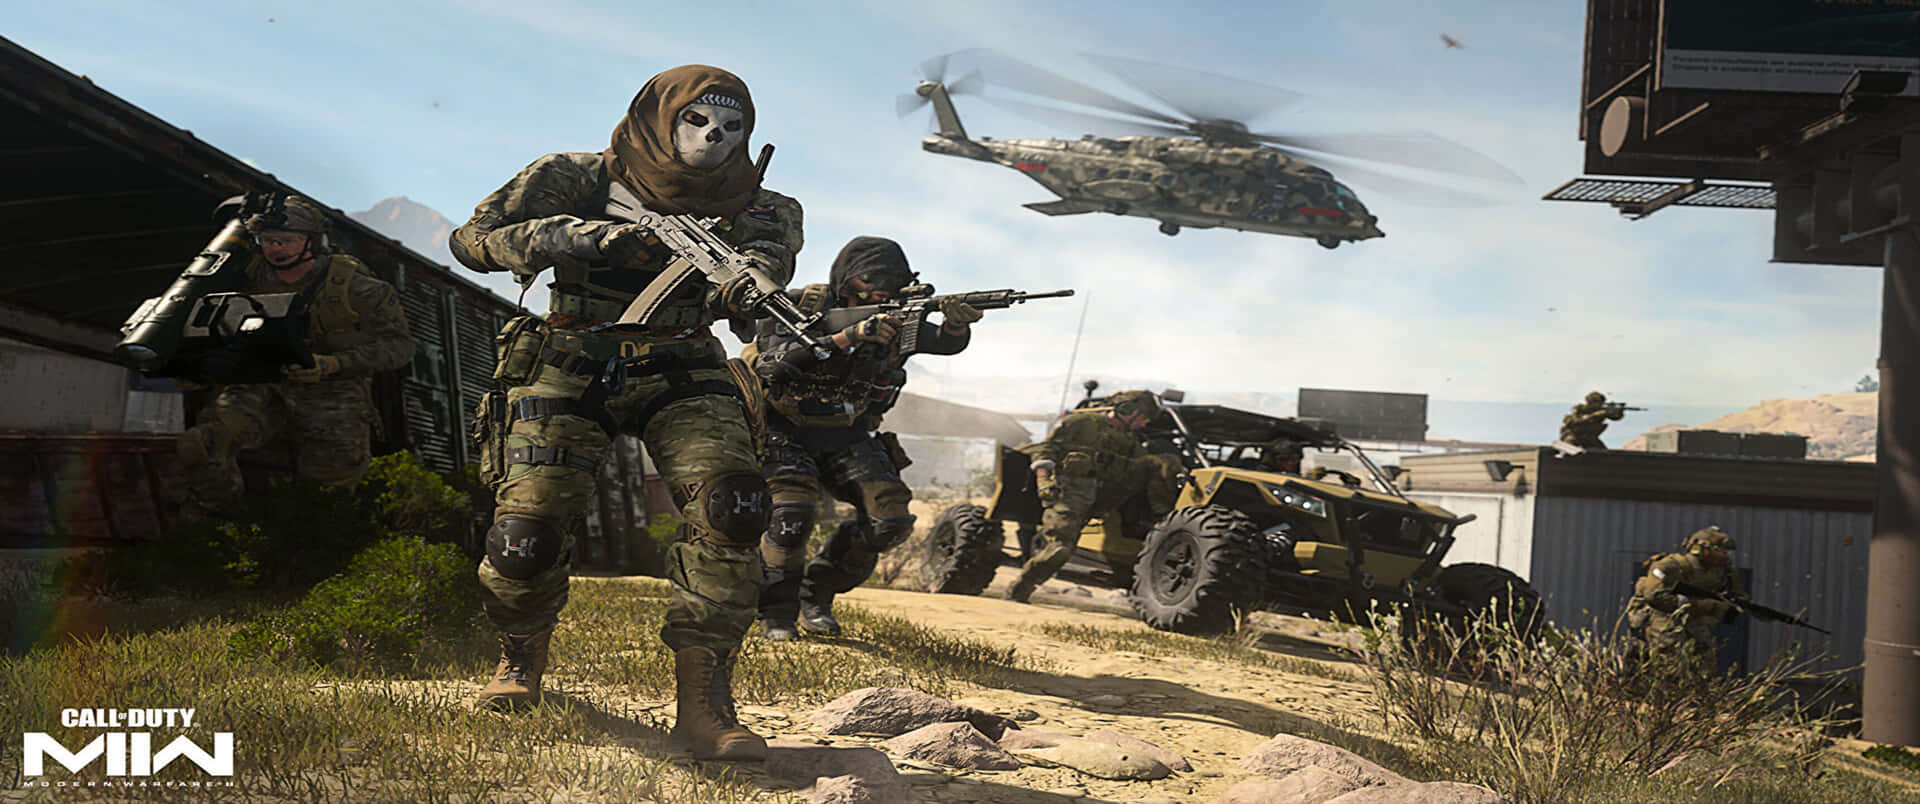 Simonriley 3440x1440p Call Of Duty Modern Warfare Bakgrundsbild.